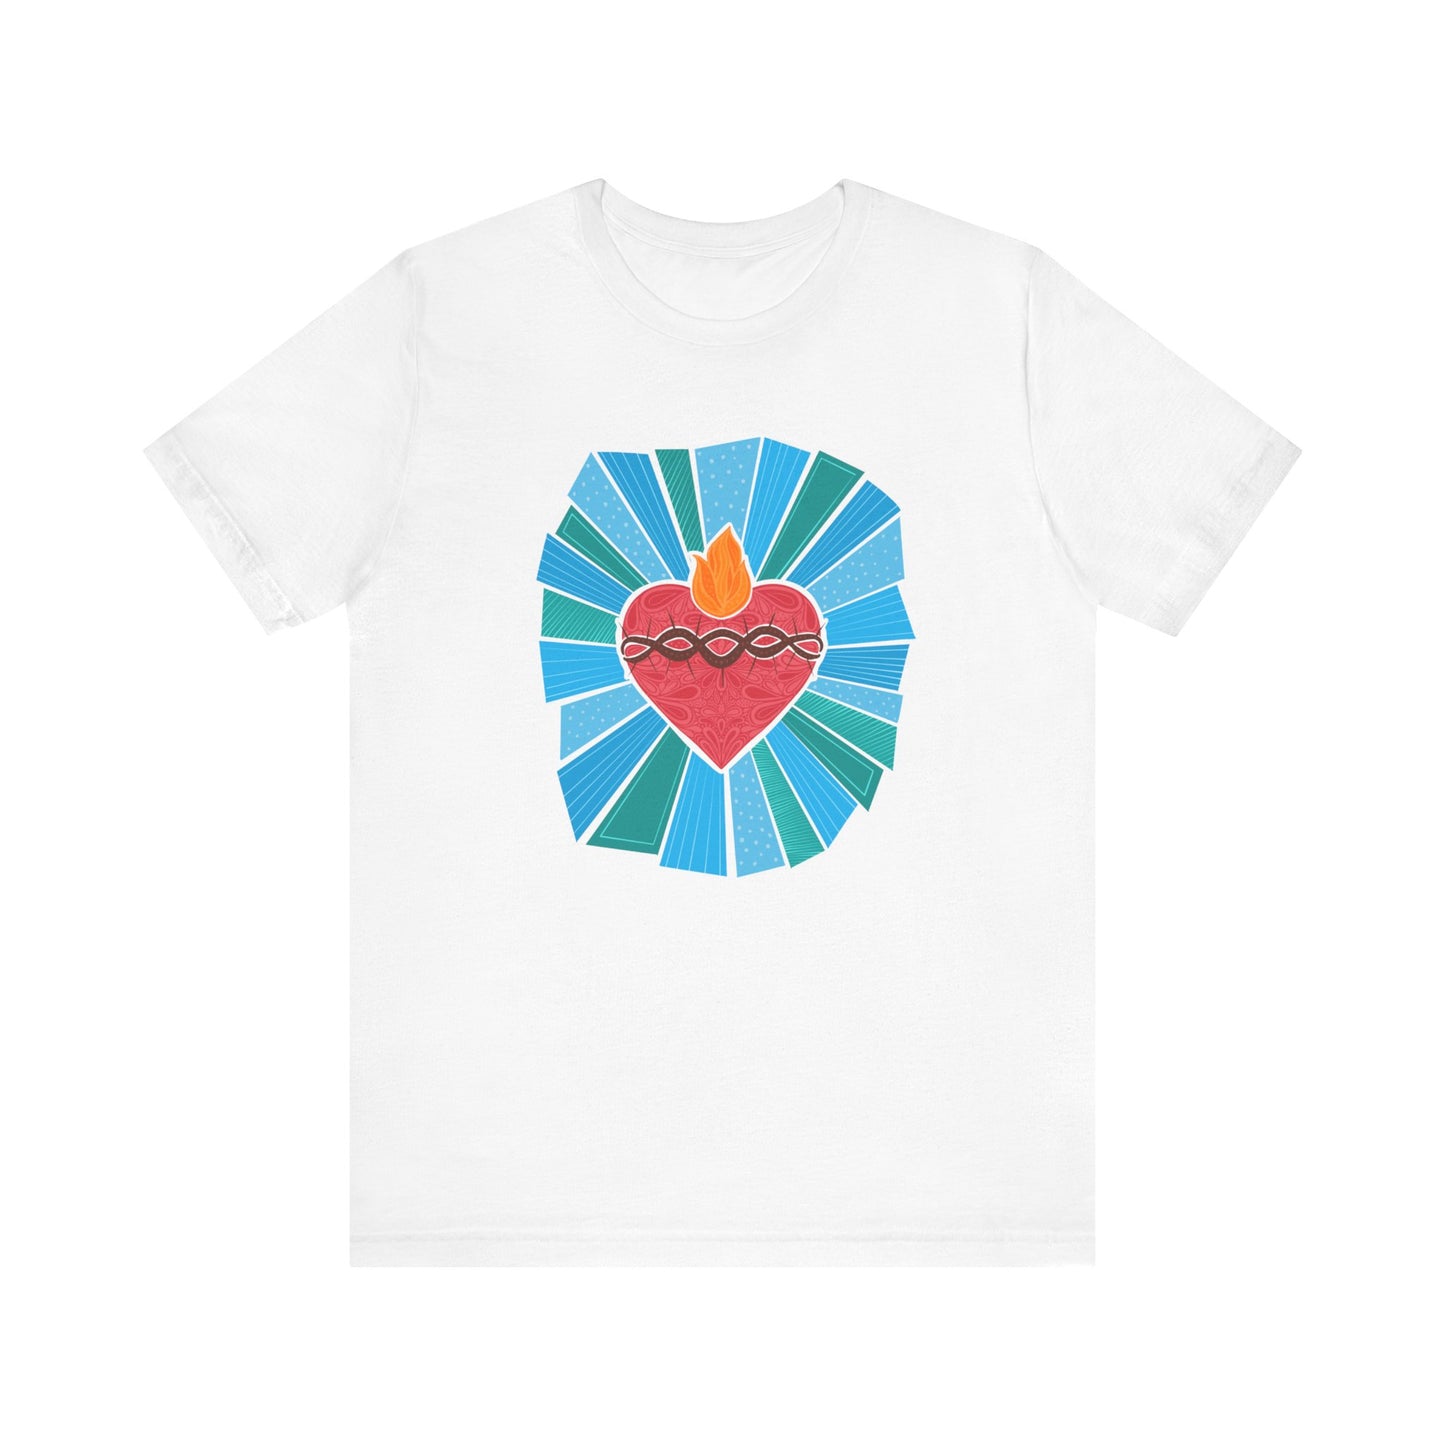 Sacred Heart of Jesus T-Shirt